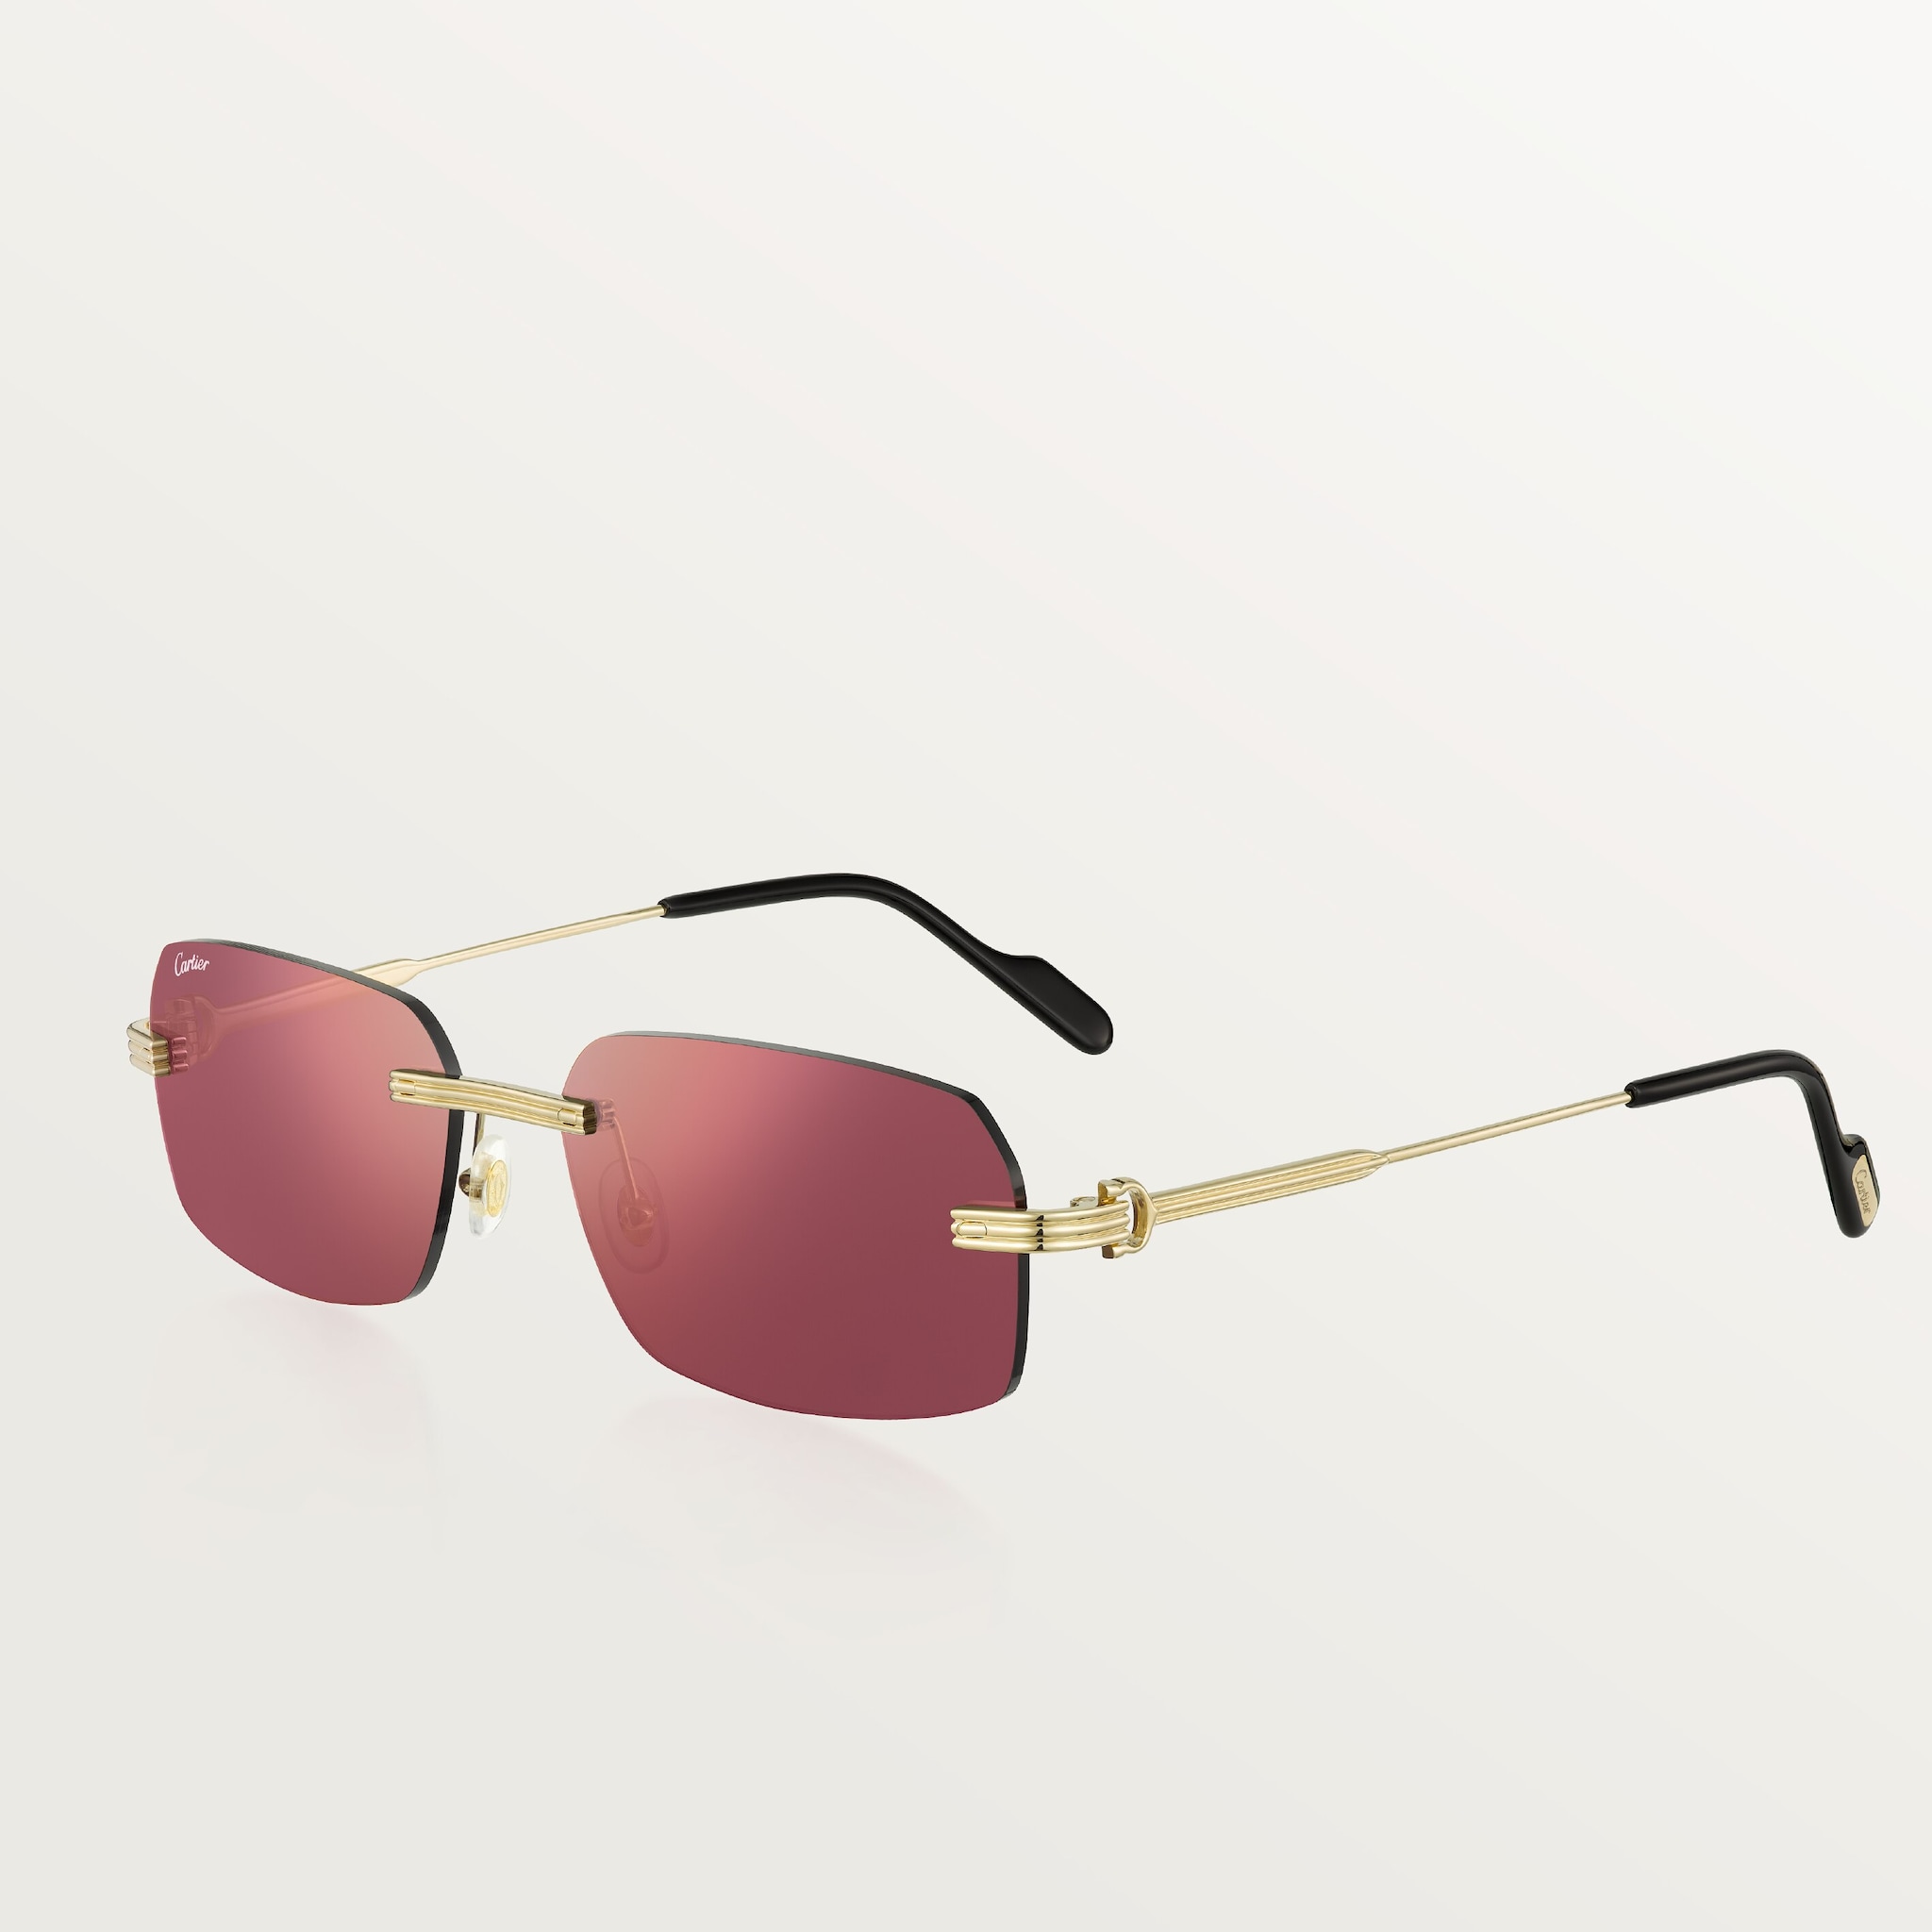 Première de Cartier sunglassesSmooth golden-finish metal, burgundy lenses